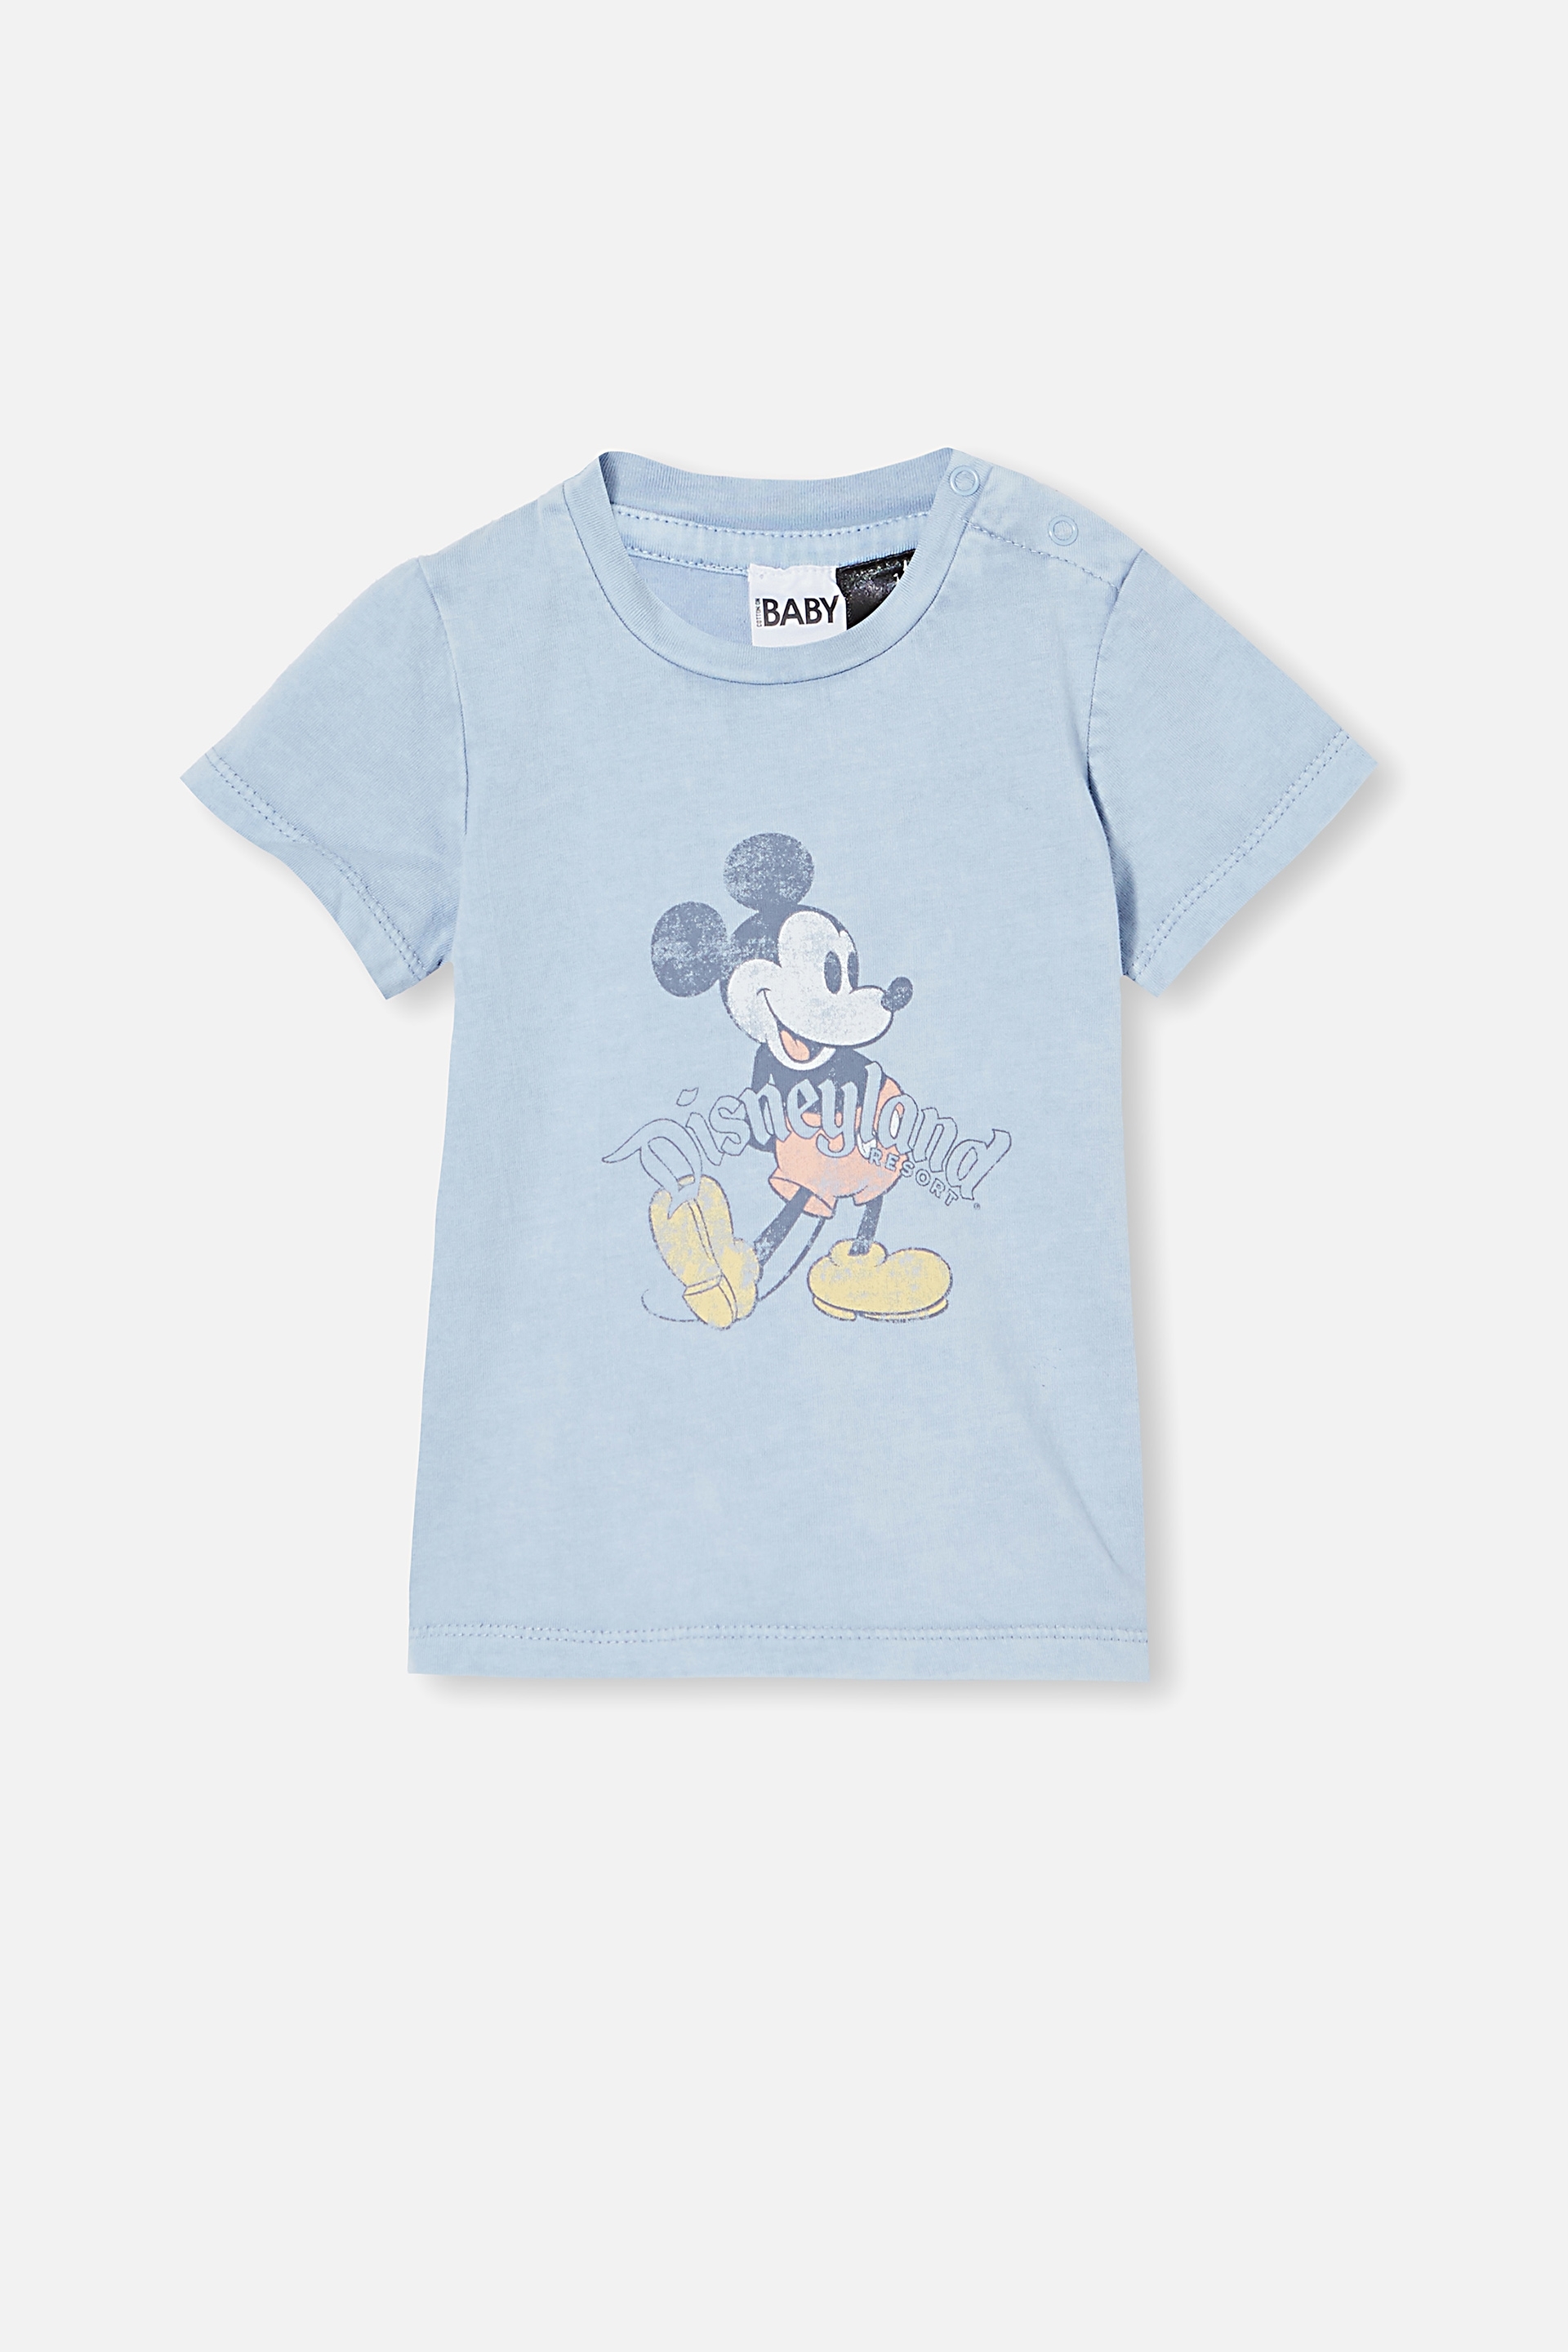 Cotton On Kids - Disneyland Jamie Short Sleeve Tee - Lcn dis dusty blue snow wash/vintage mickey